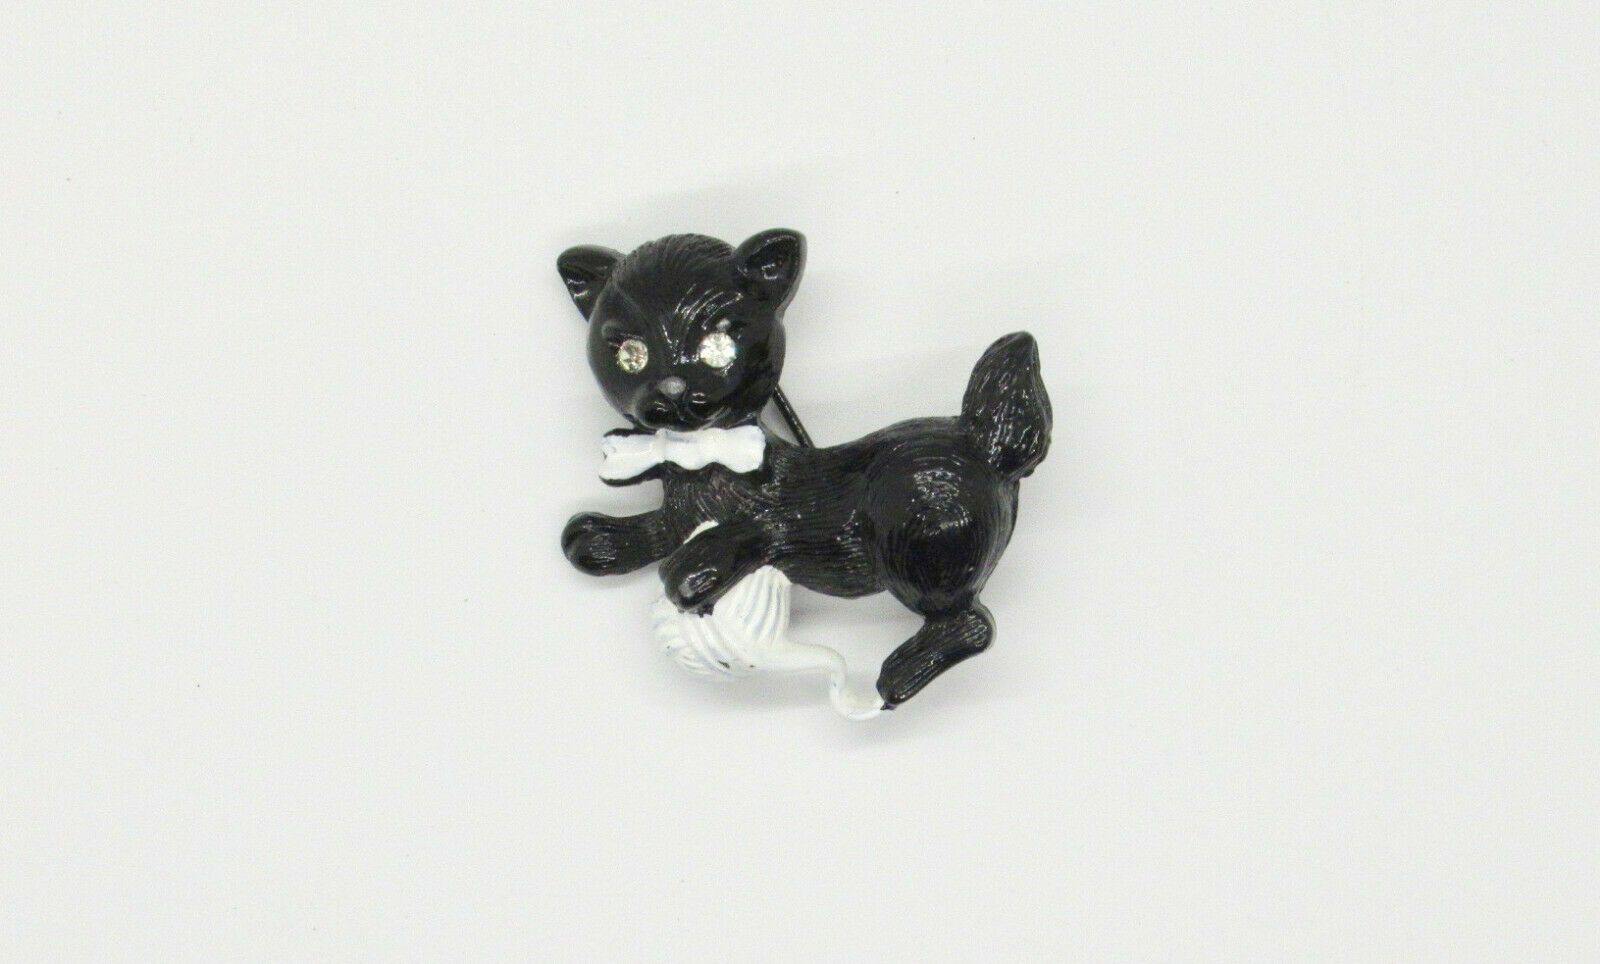 Vintage Gerry's Black Kitten Brooch with Sparkling Eyes - Lamoree’s Vintage